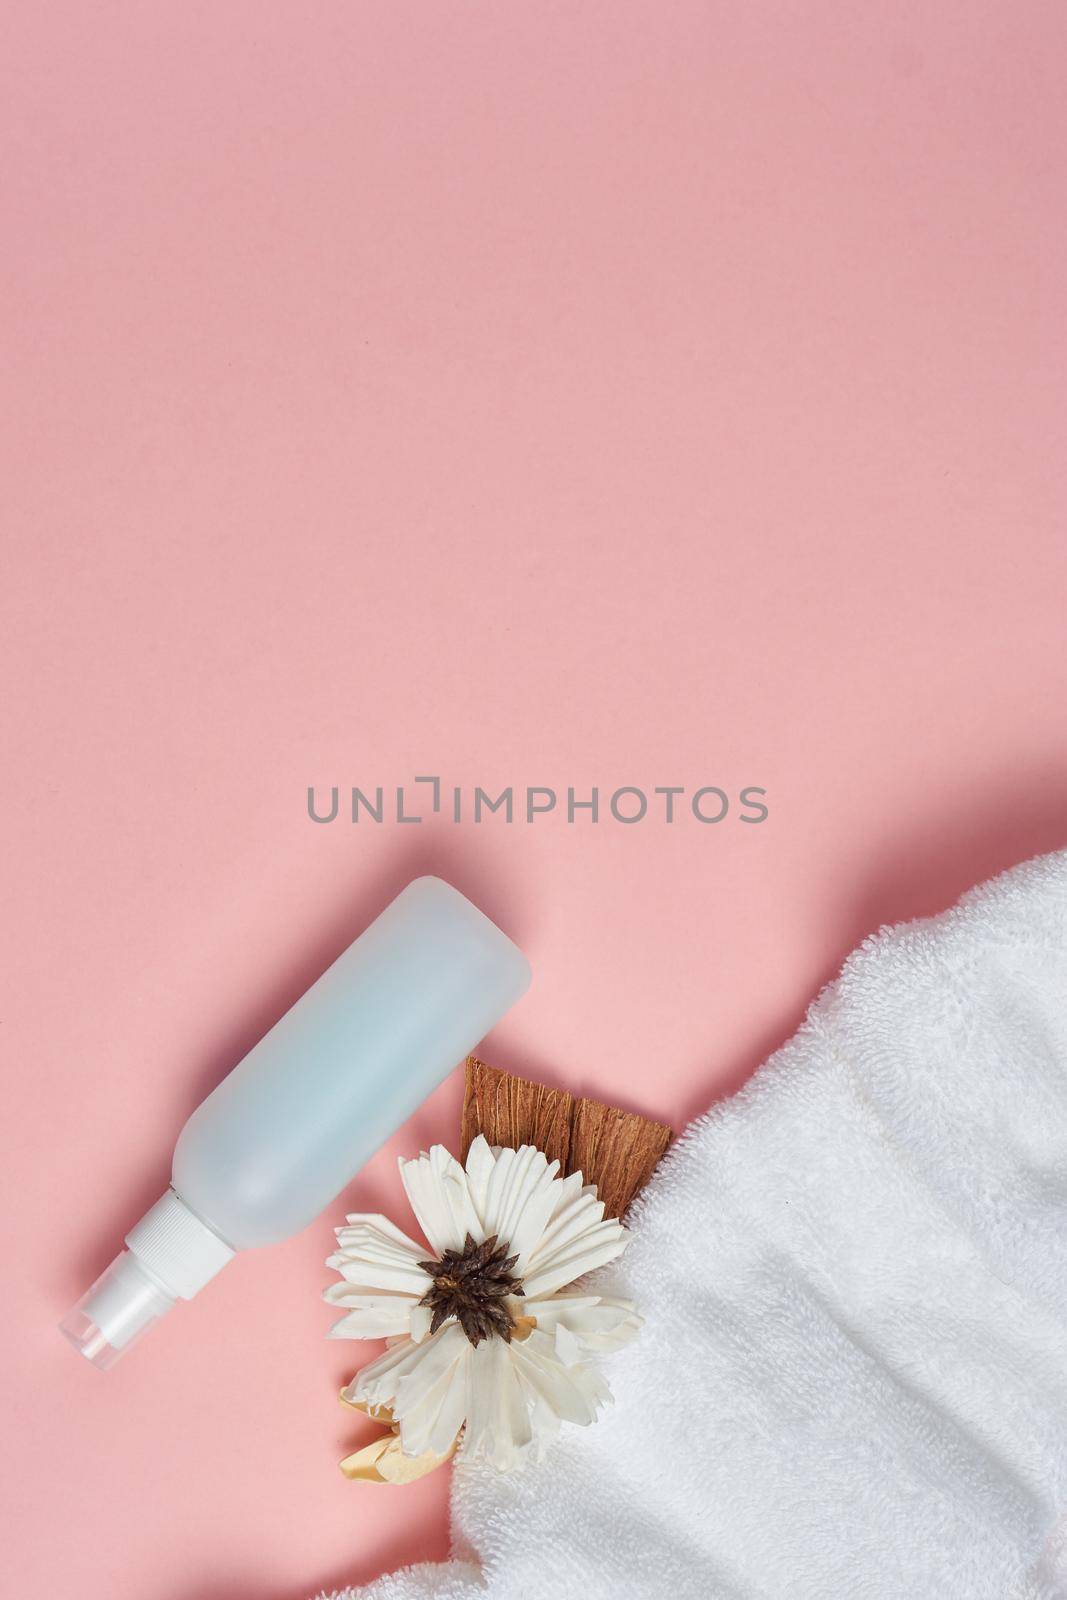 bathroom accessories shampoo beauty salon isolated background. High quality photo